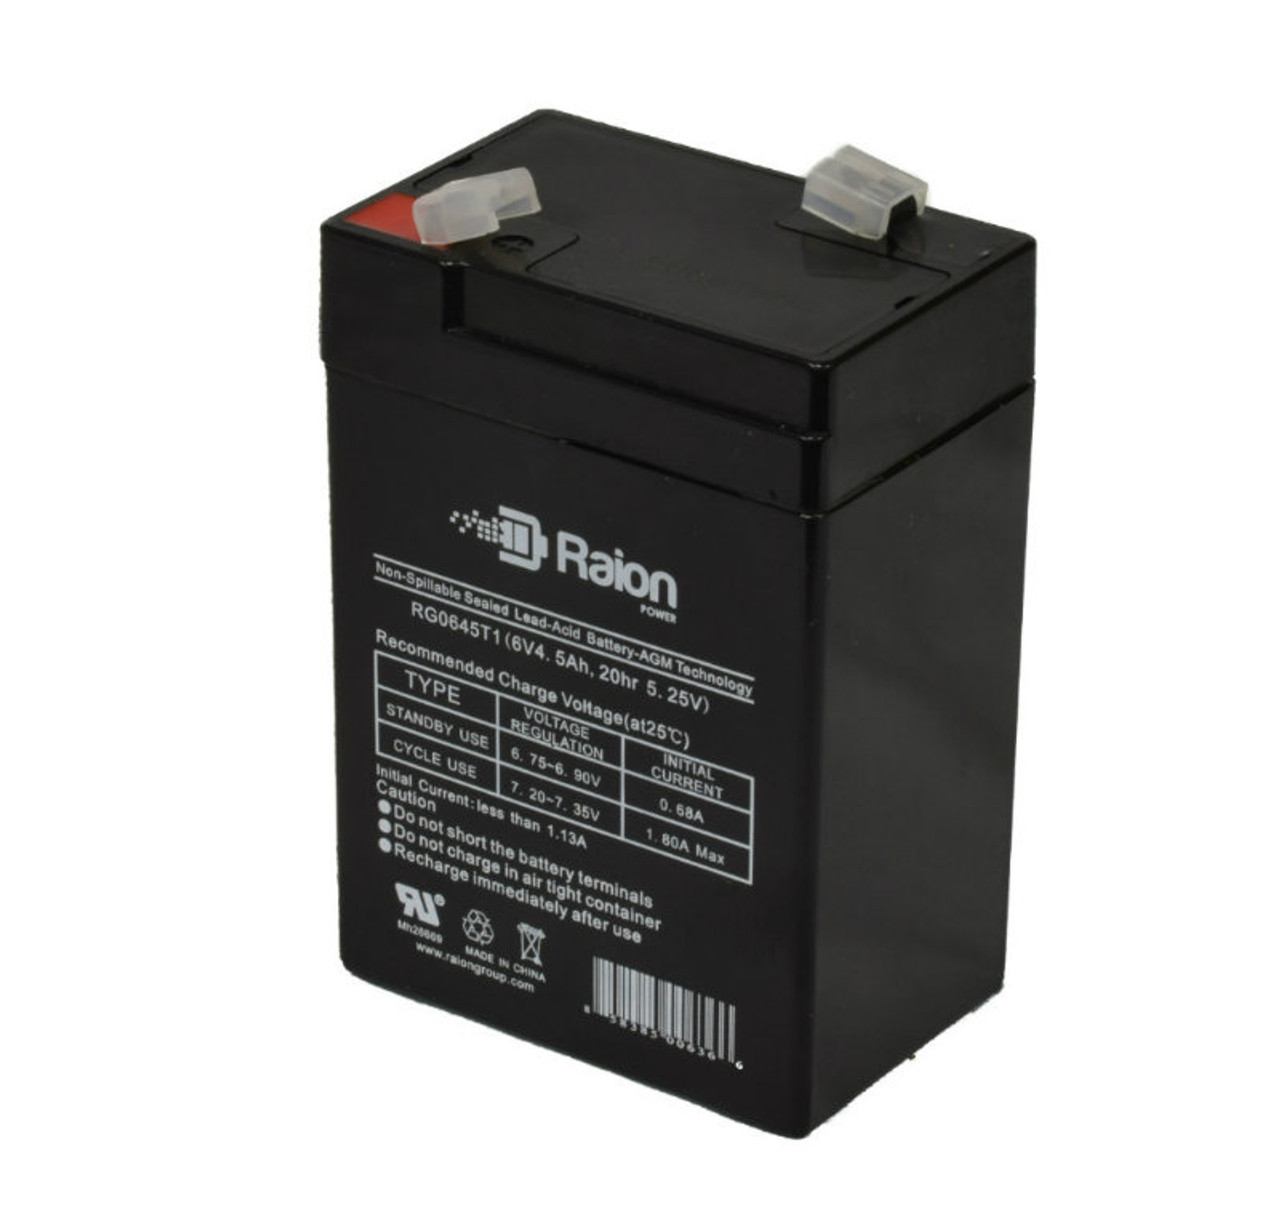 Raion Power RG0645T1 6V 4.5Ah Replacement Battery Cartridge for Emergi-Lite 12000